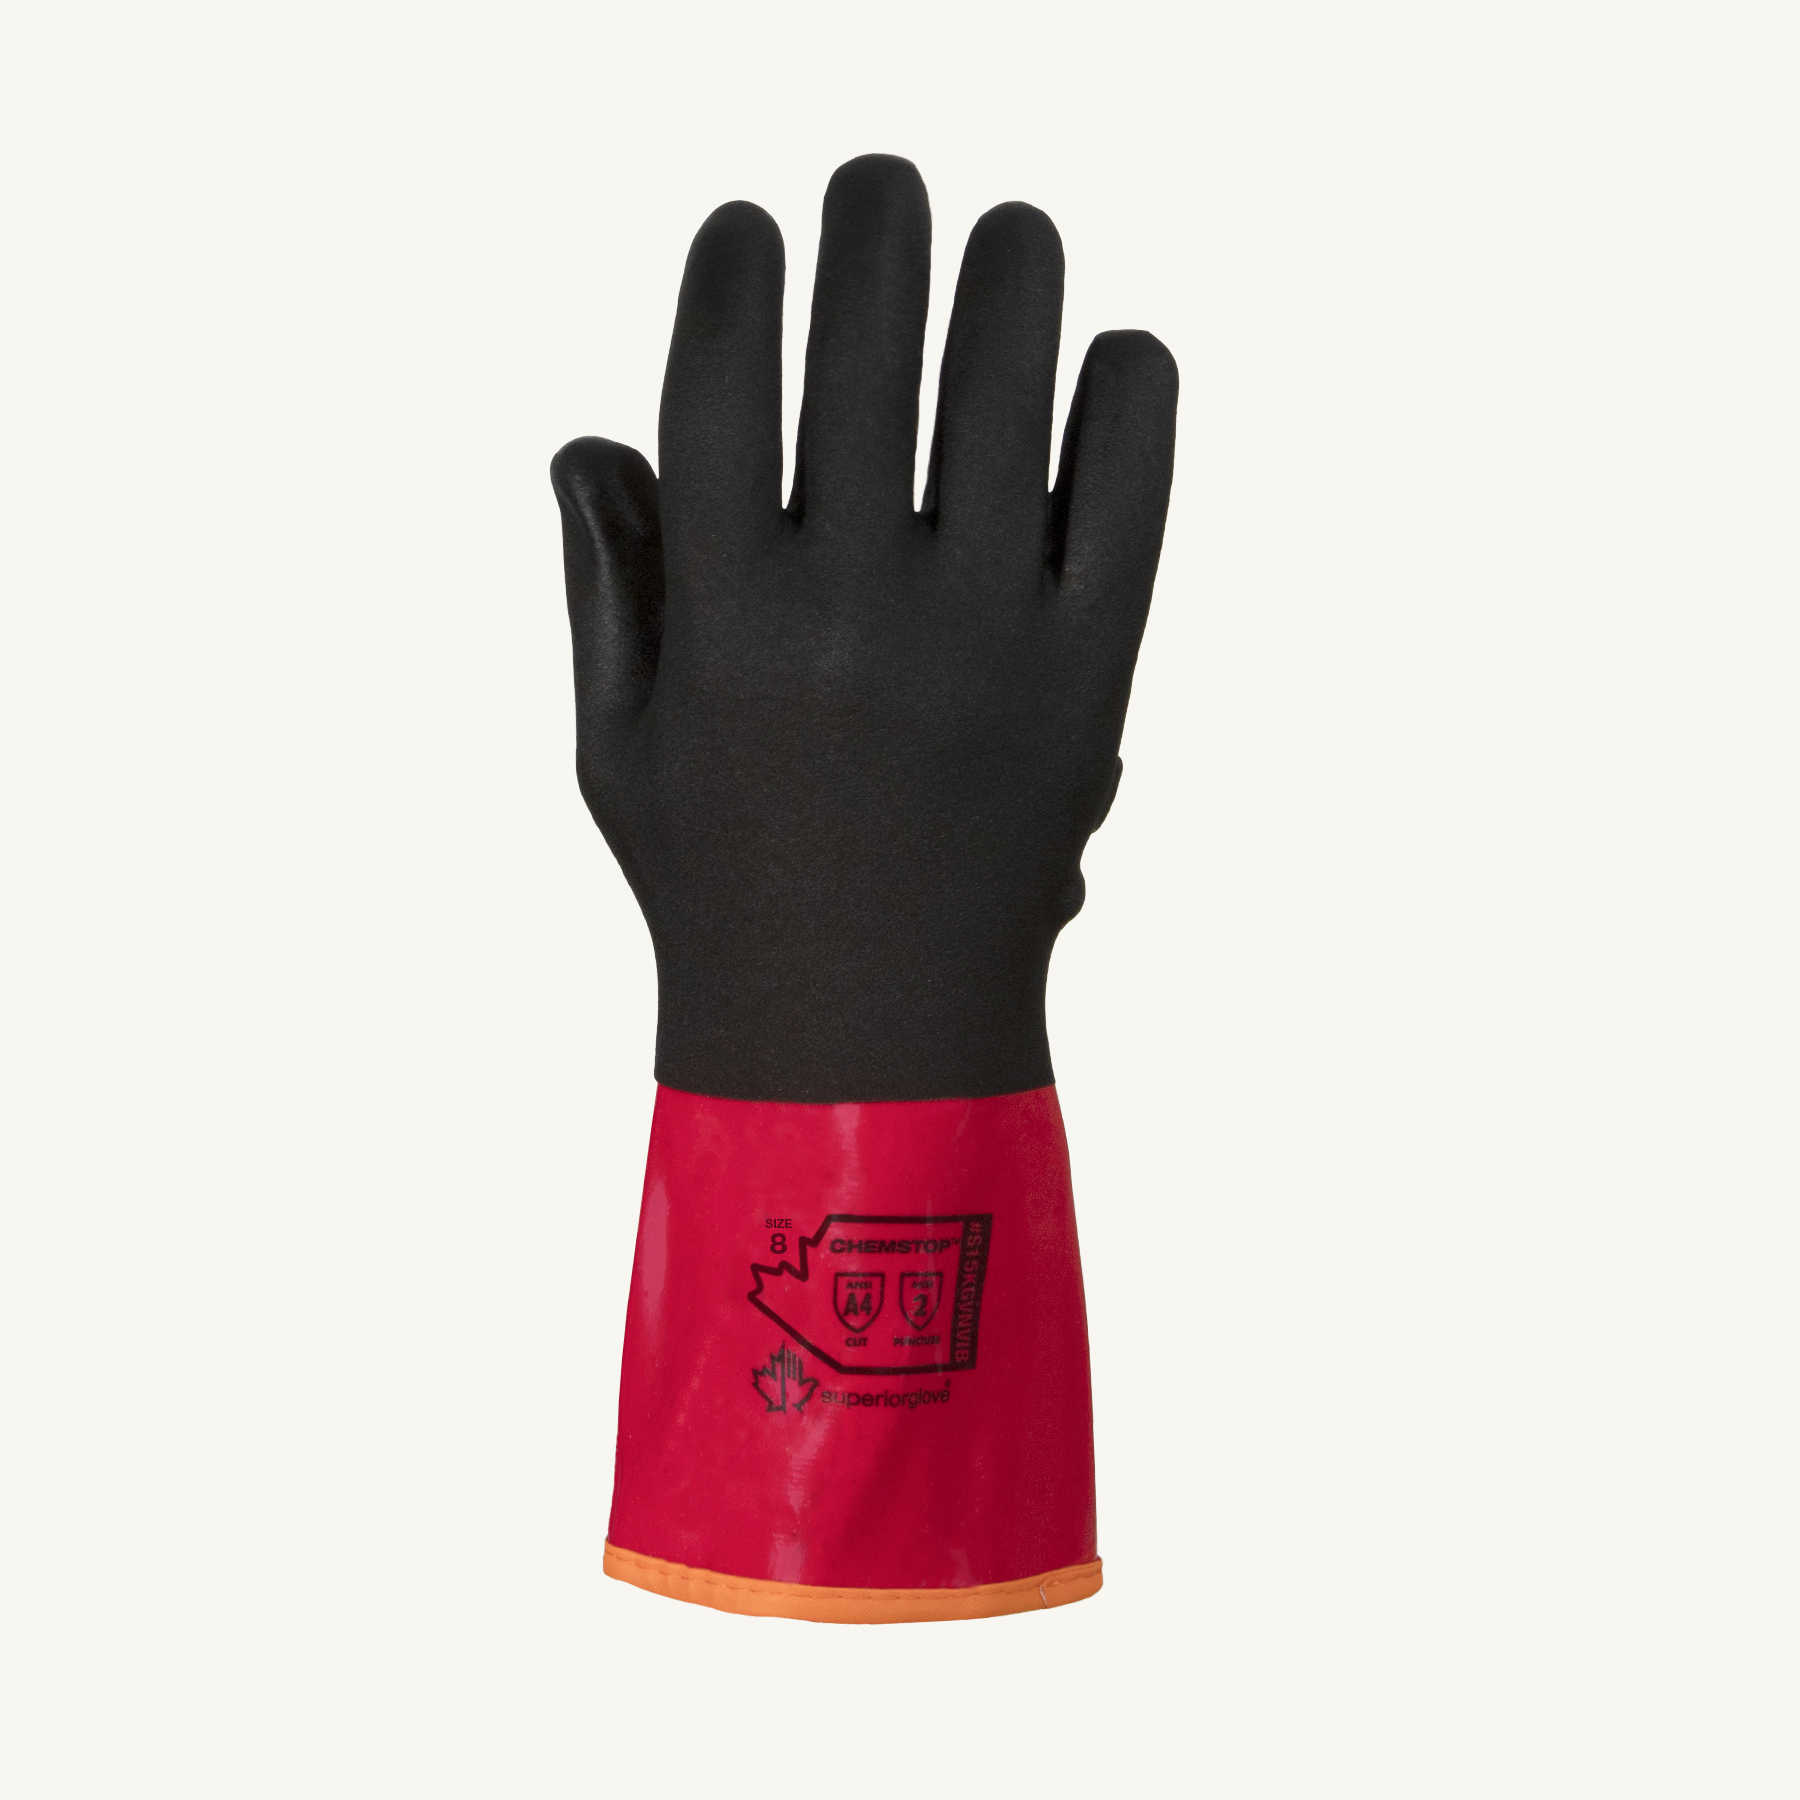 Chemstop™ Anti-Vibration PVC Gloves With Aramid Fiber And Full Nitrile Coating